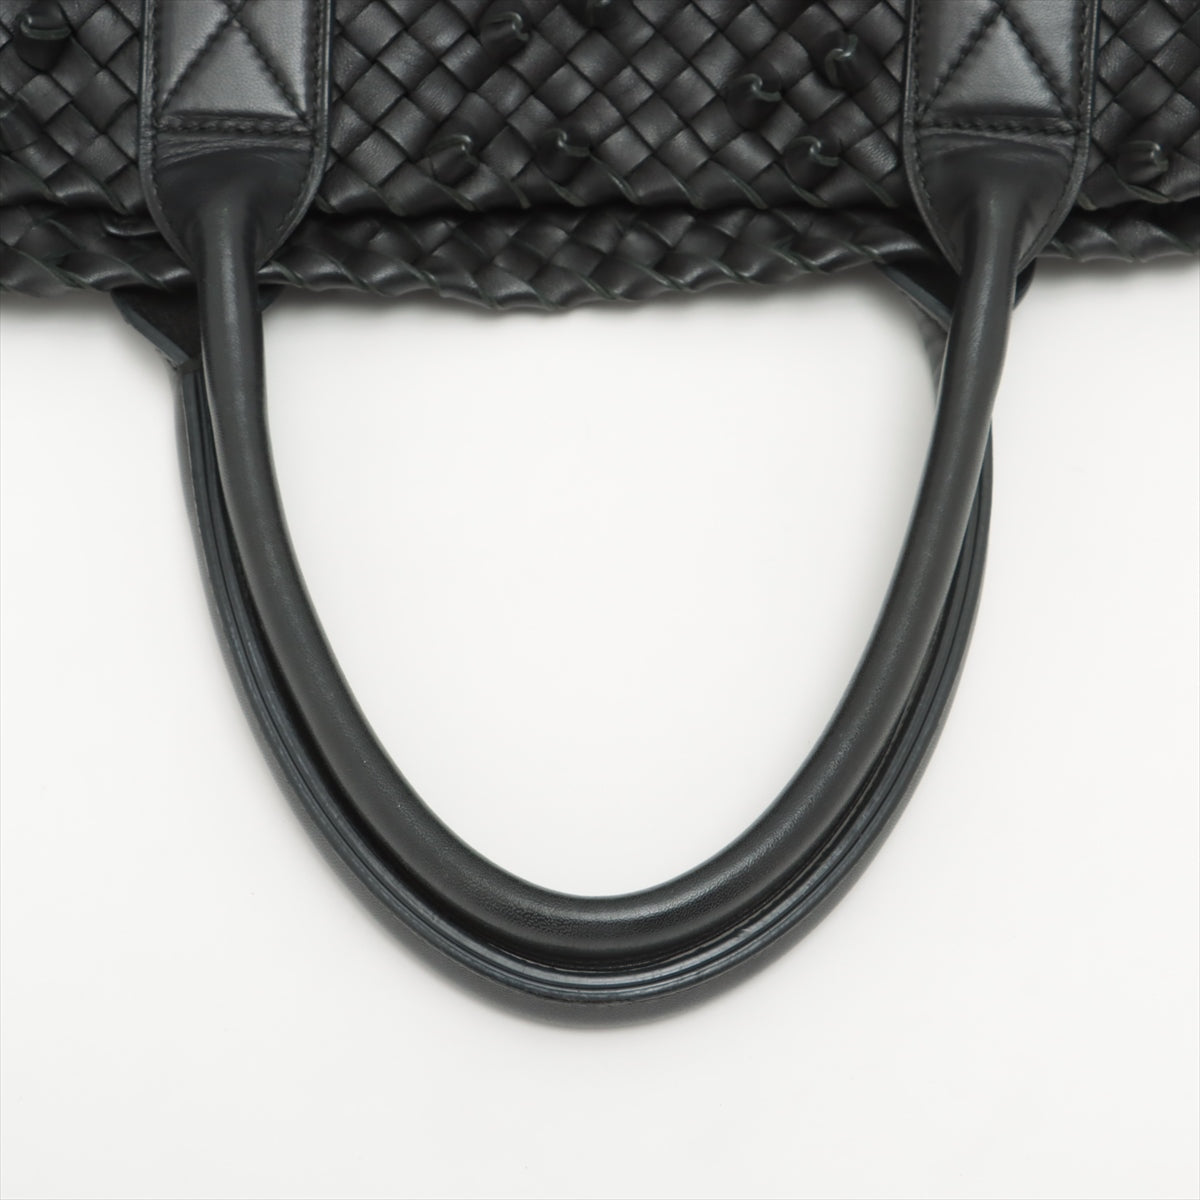 Bottega Veneta Intrecciato Cabas MM Leather Tote bag Black